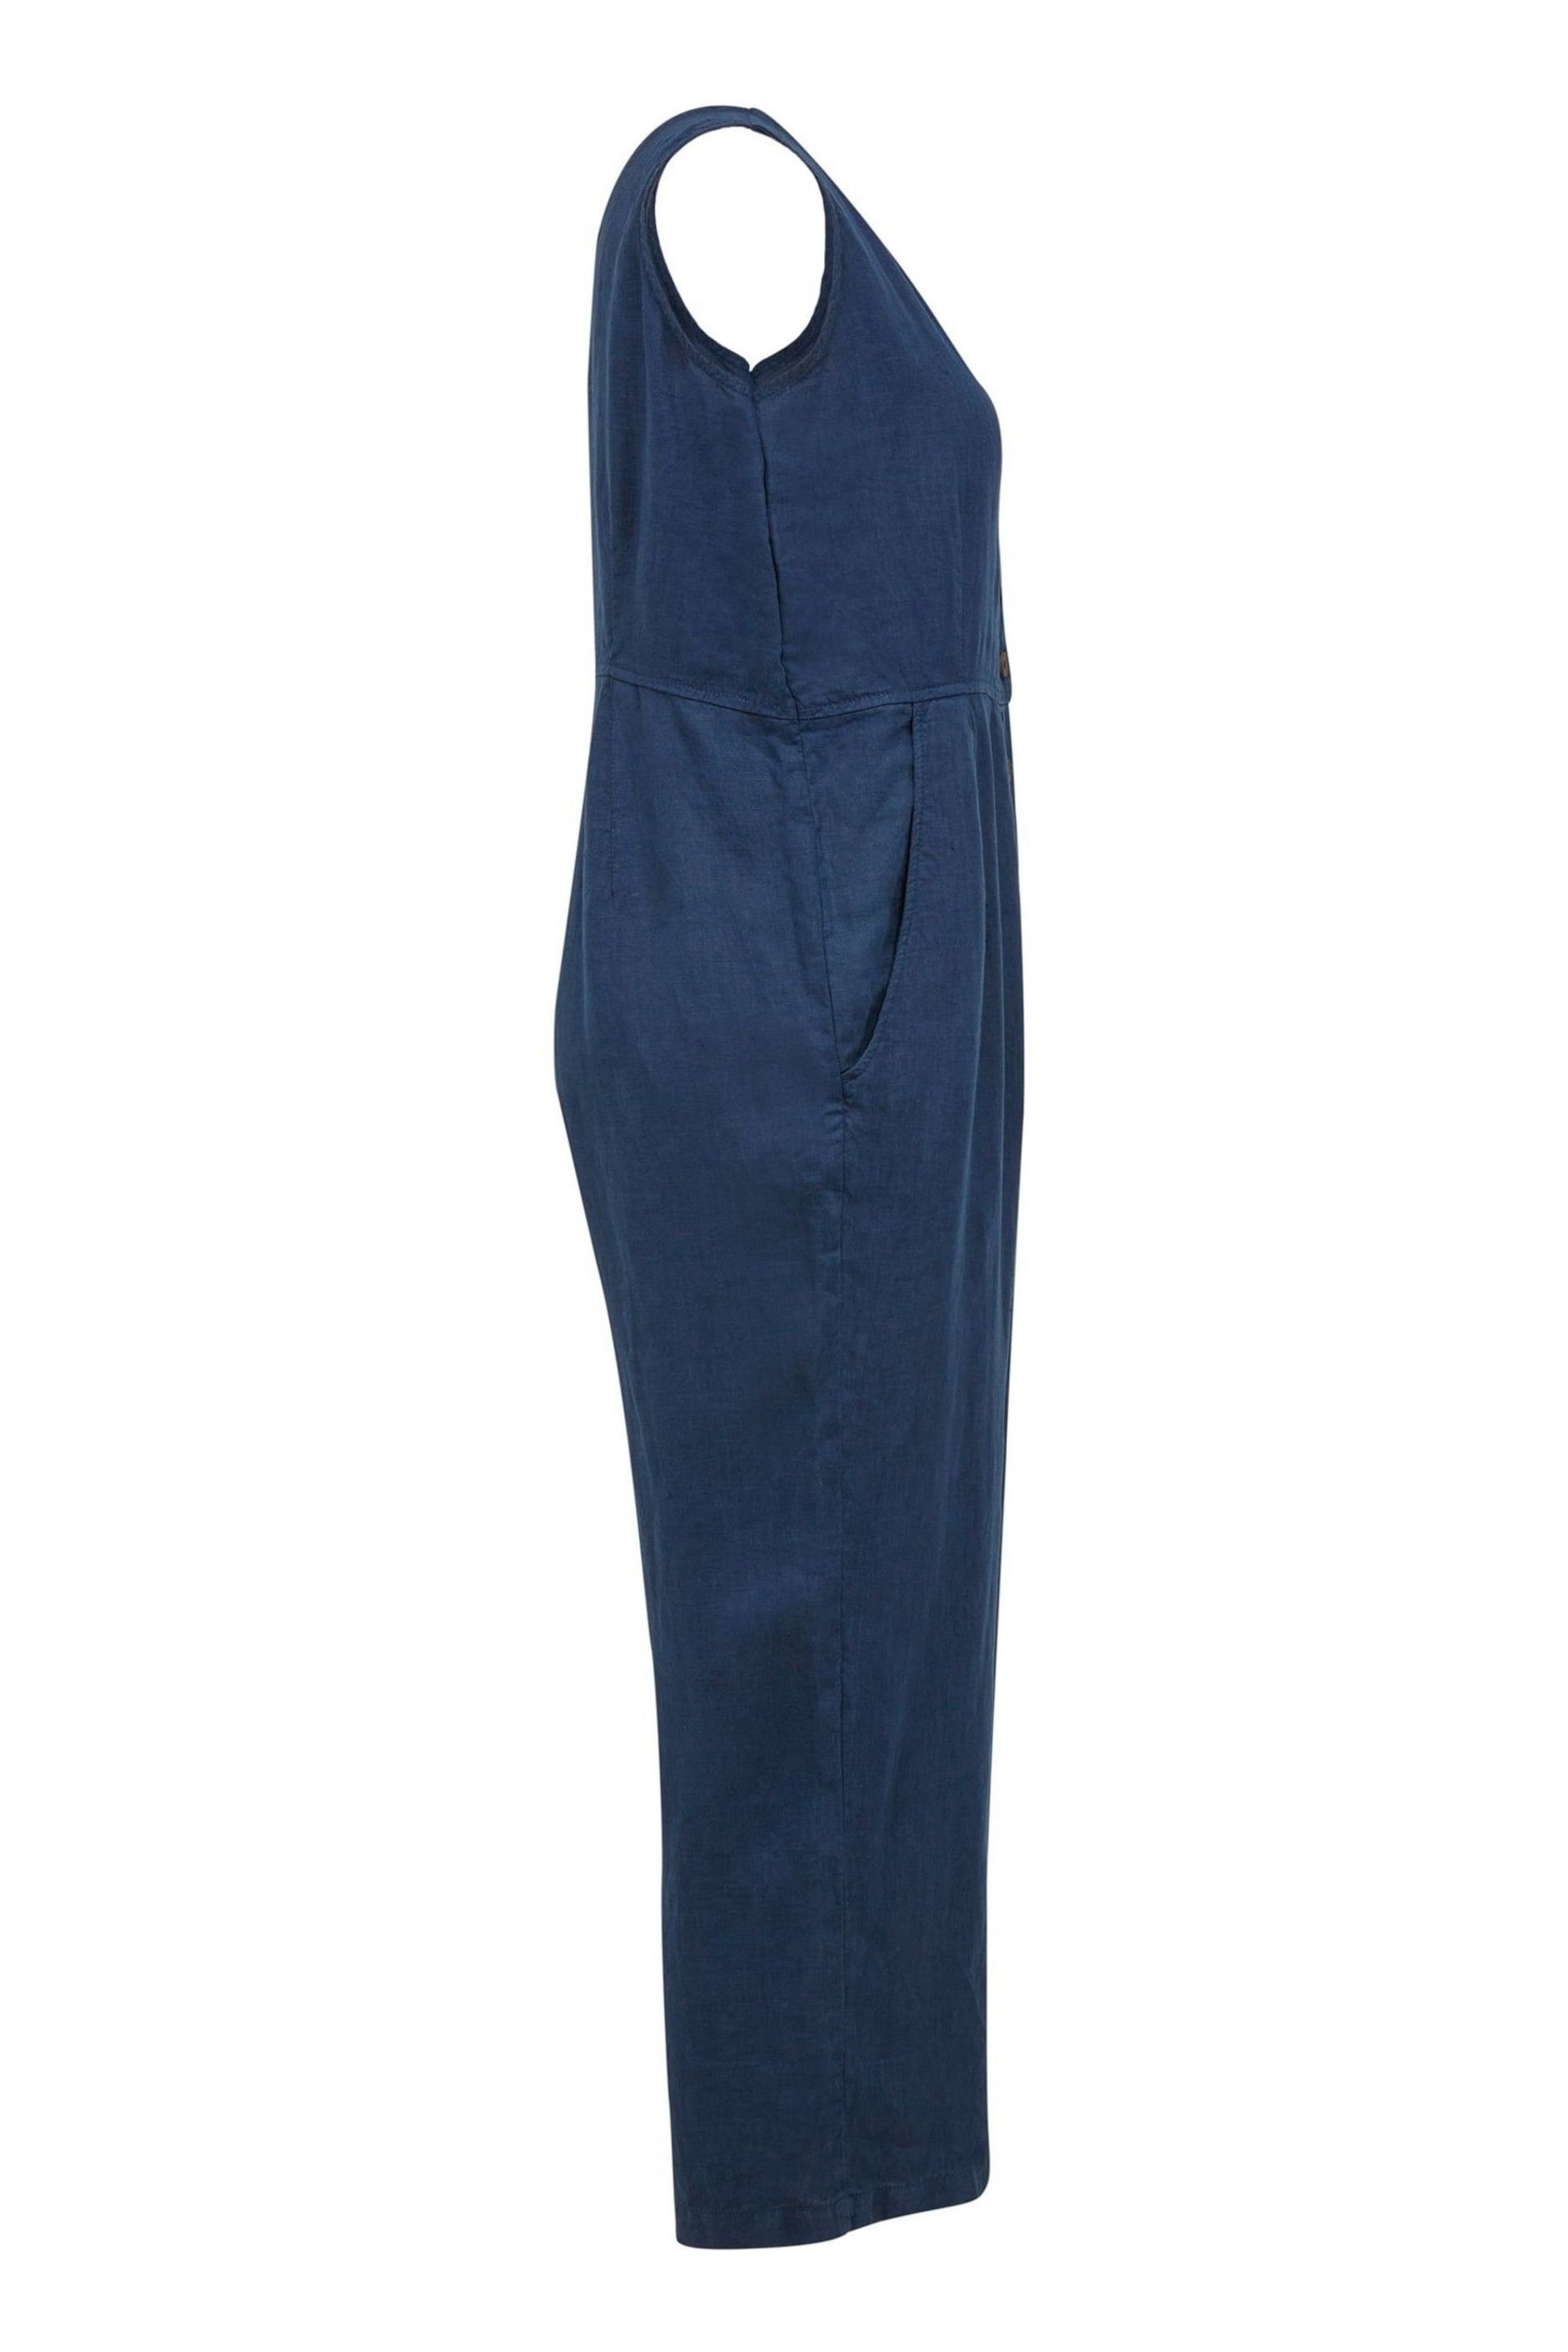 Celtic & Co. Blue Linen V Neck Sleeveless Jumpsuit - Image 5 of 8